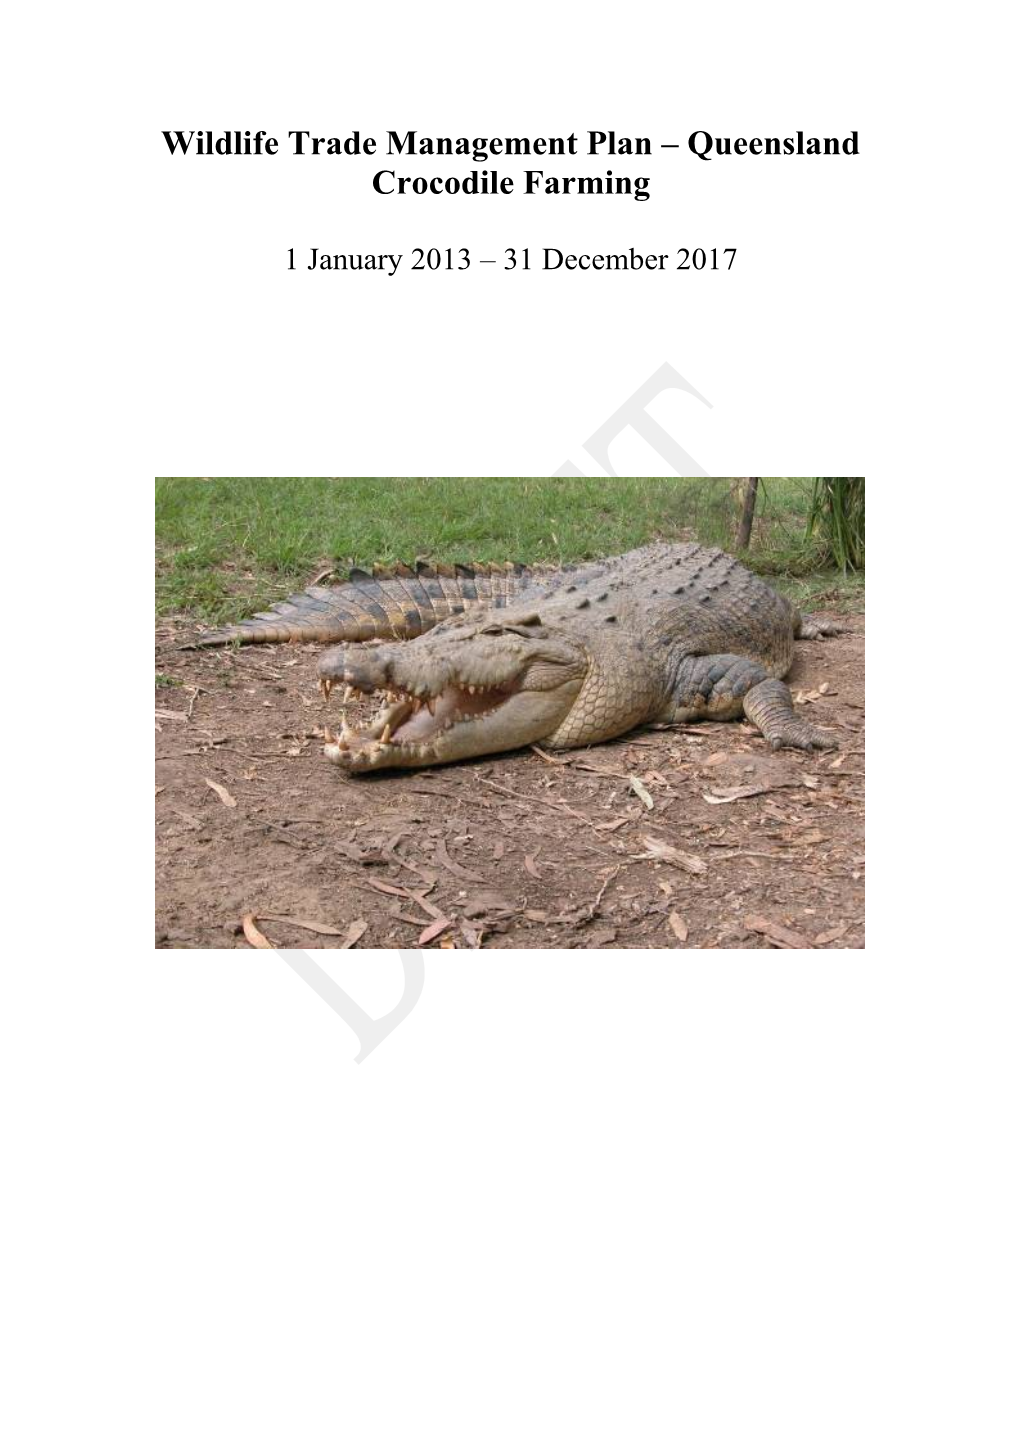 Draft Wildlife Trade Management Plan Queensland Crocodile Farming 1 January 2013 - 31 December